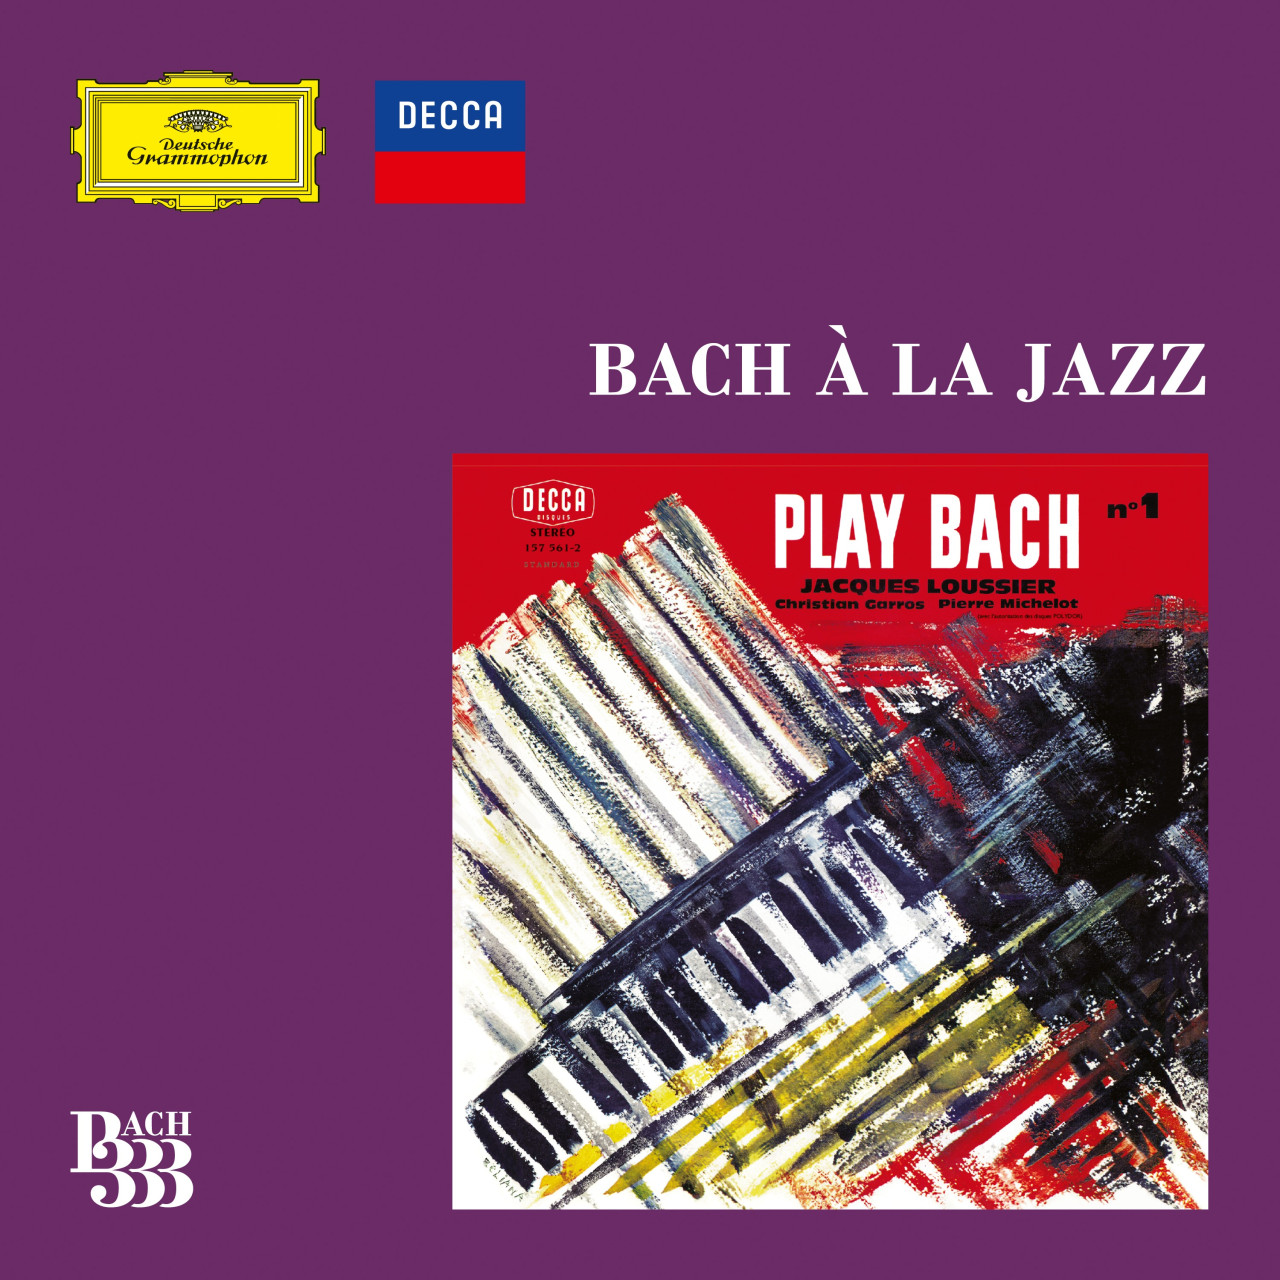 BACH 333 - Bach a la Jazz | Deutsche Grammophon